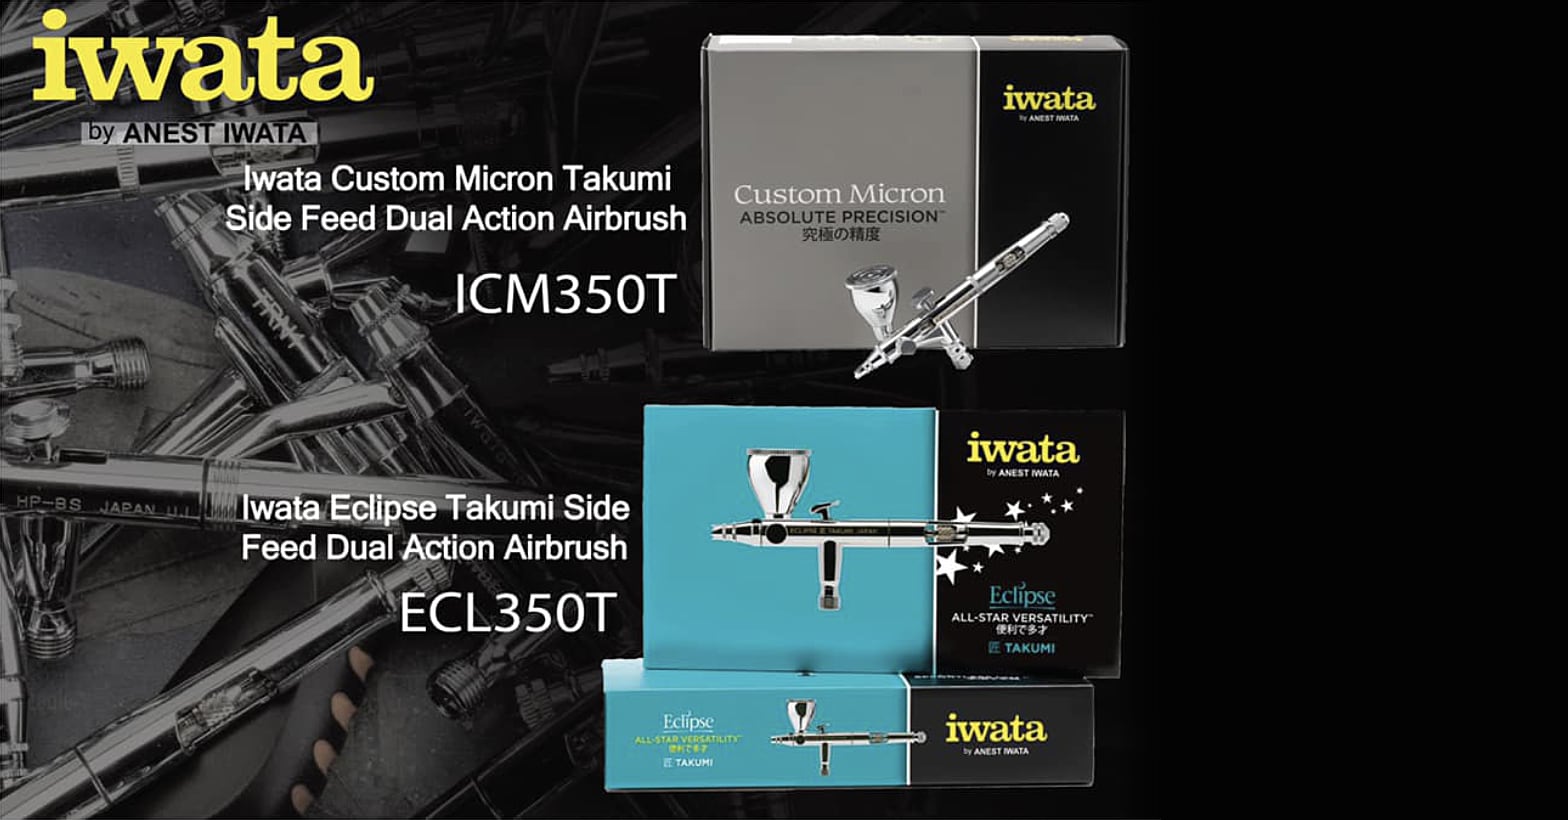 anest Iwata aerografy Iwata Custom Micron Takumi i Iwata Eclipse Takumi